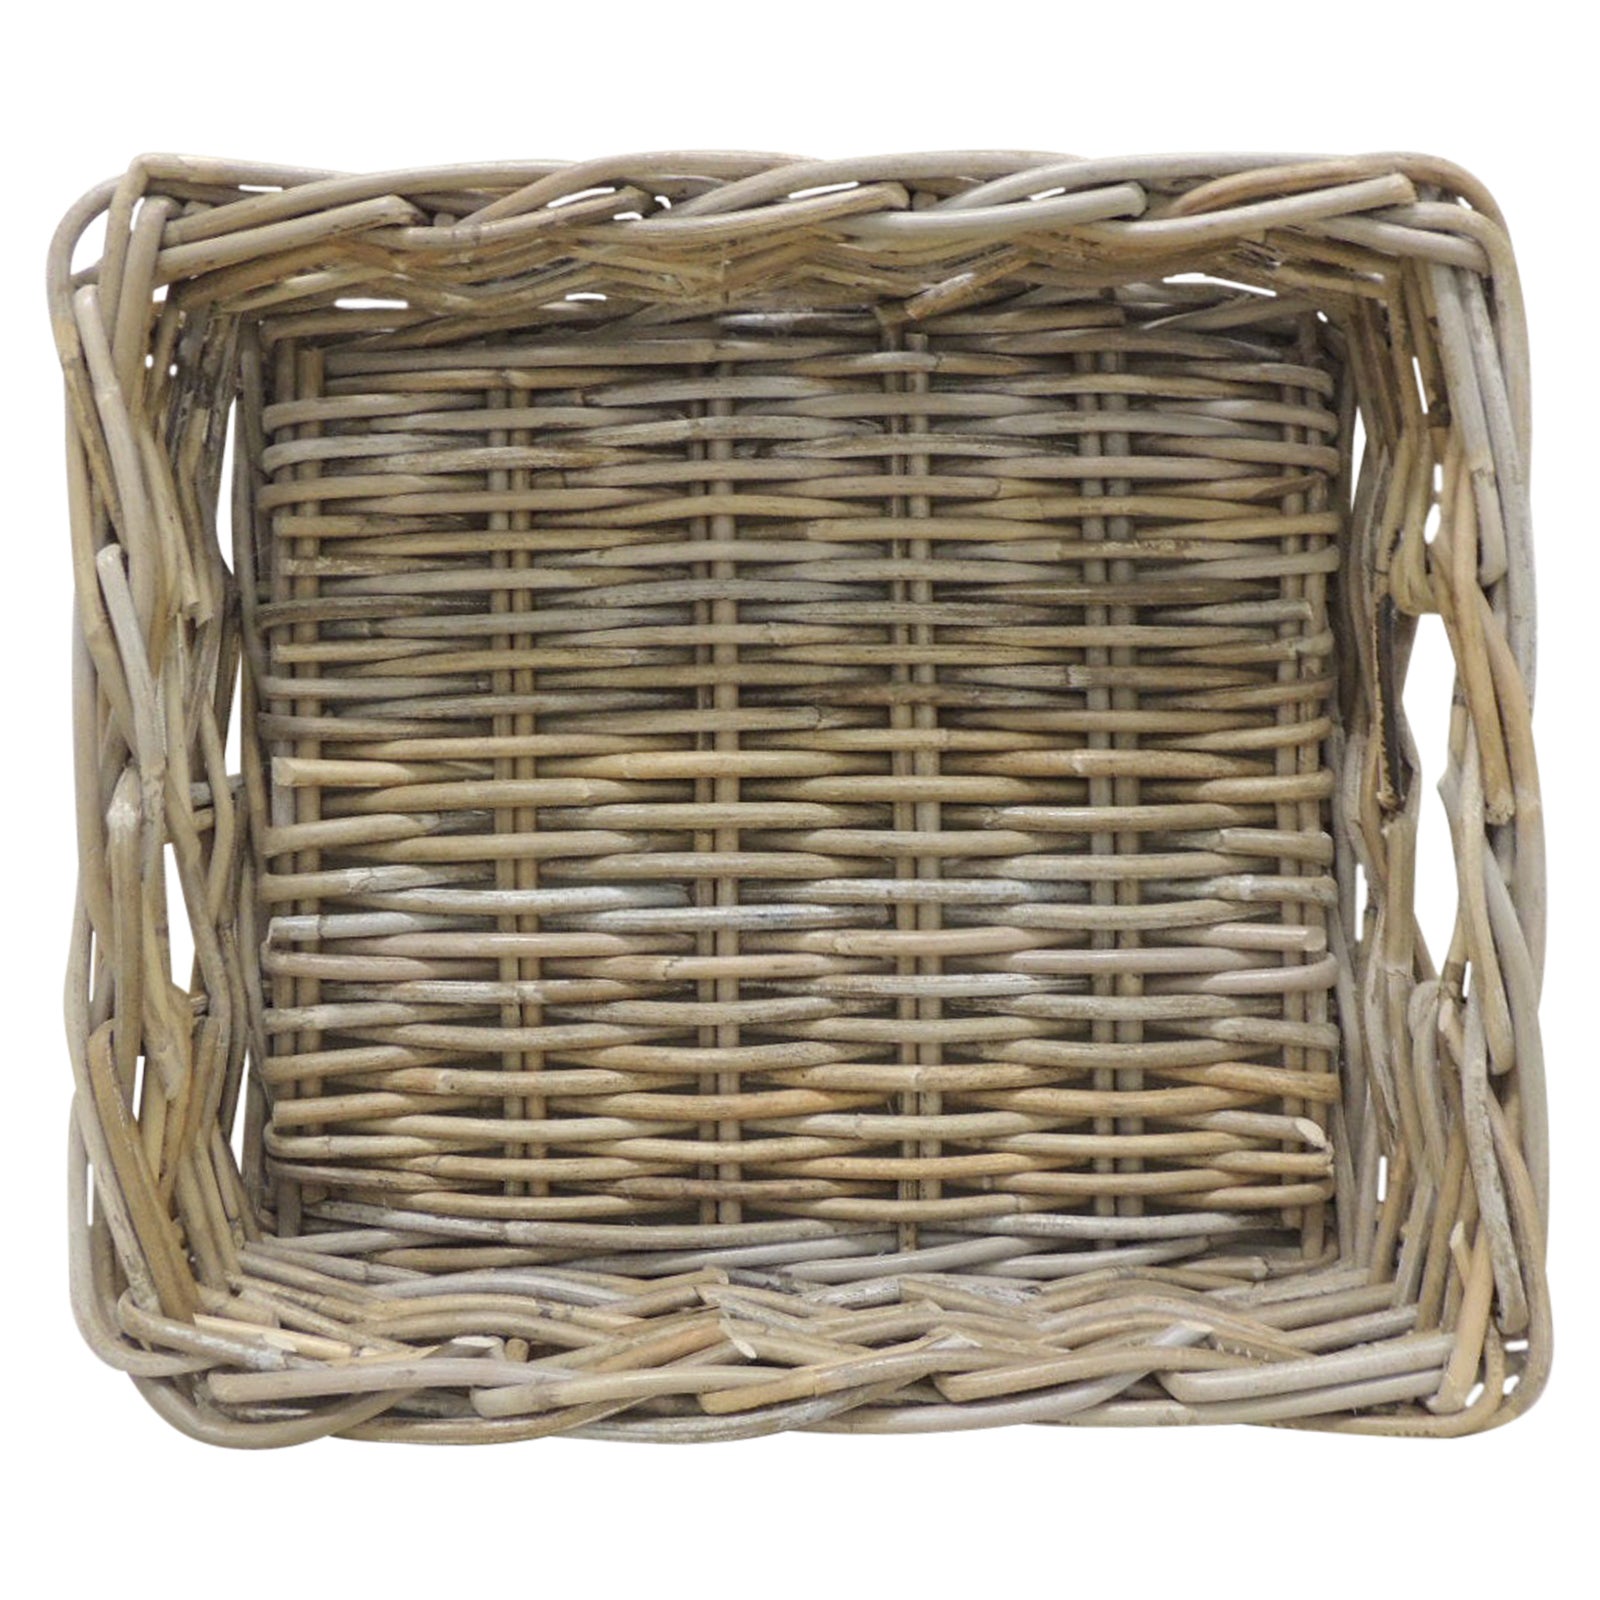 Rectangular Willow Basket with Handles or Magazine Rack